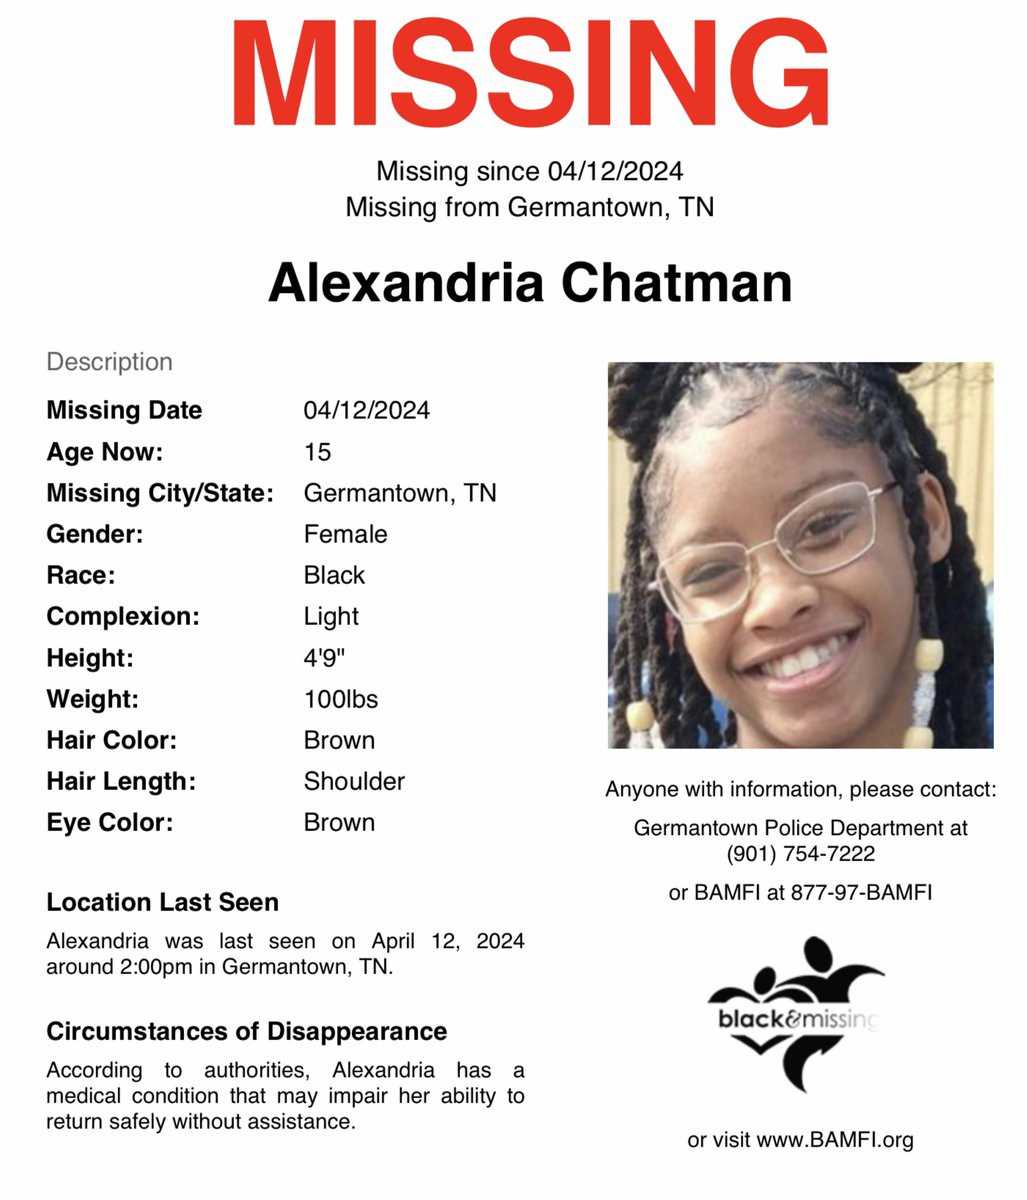 #Germantown, #Tennessee: 15y/o Alexandria Chatman was last seen on April 12 in Germantown. Have you seen Alexandria? #AlexandriaChatman